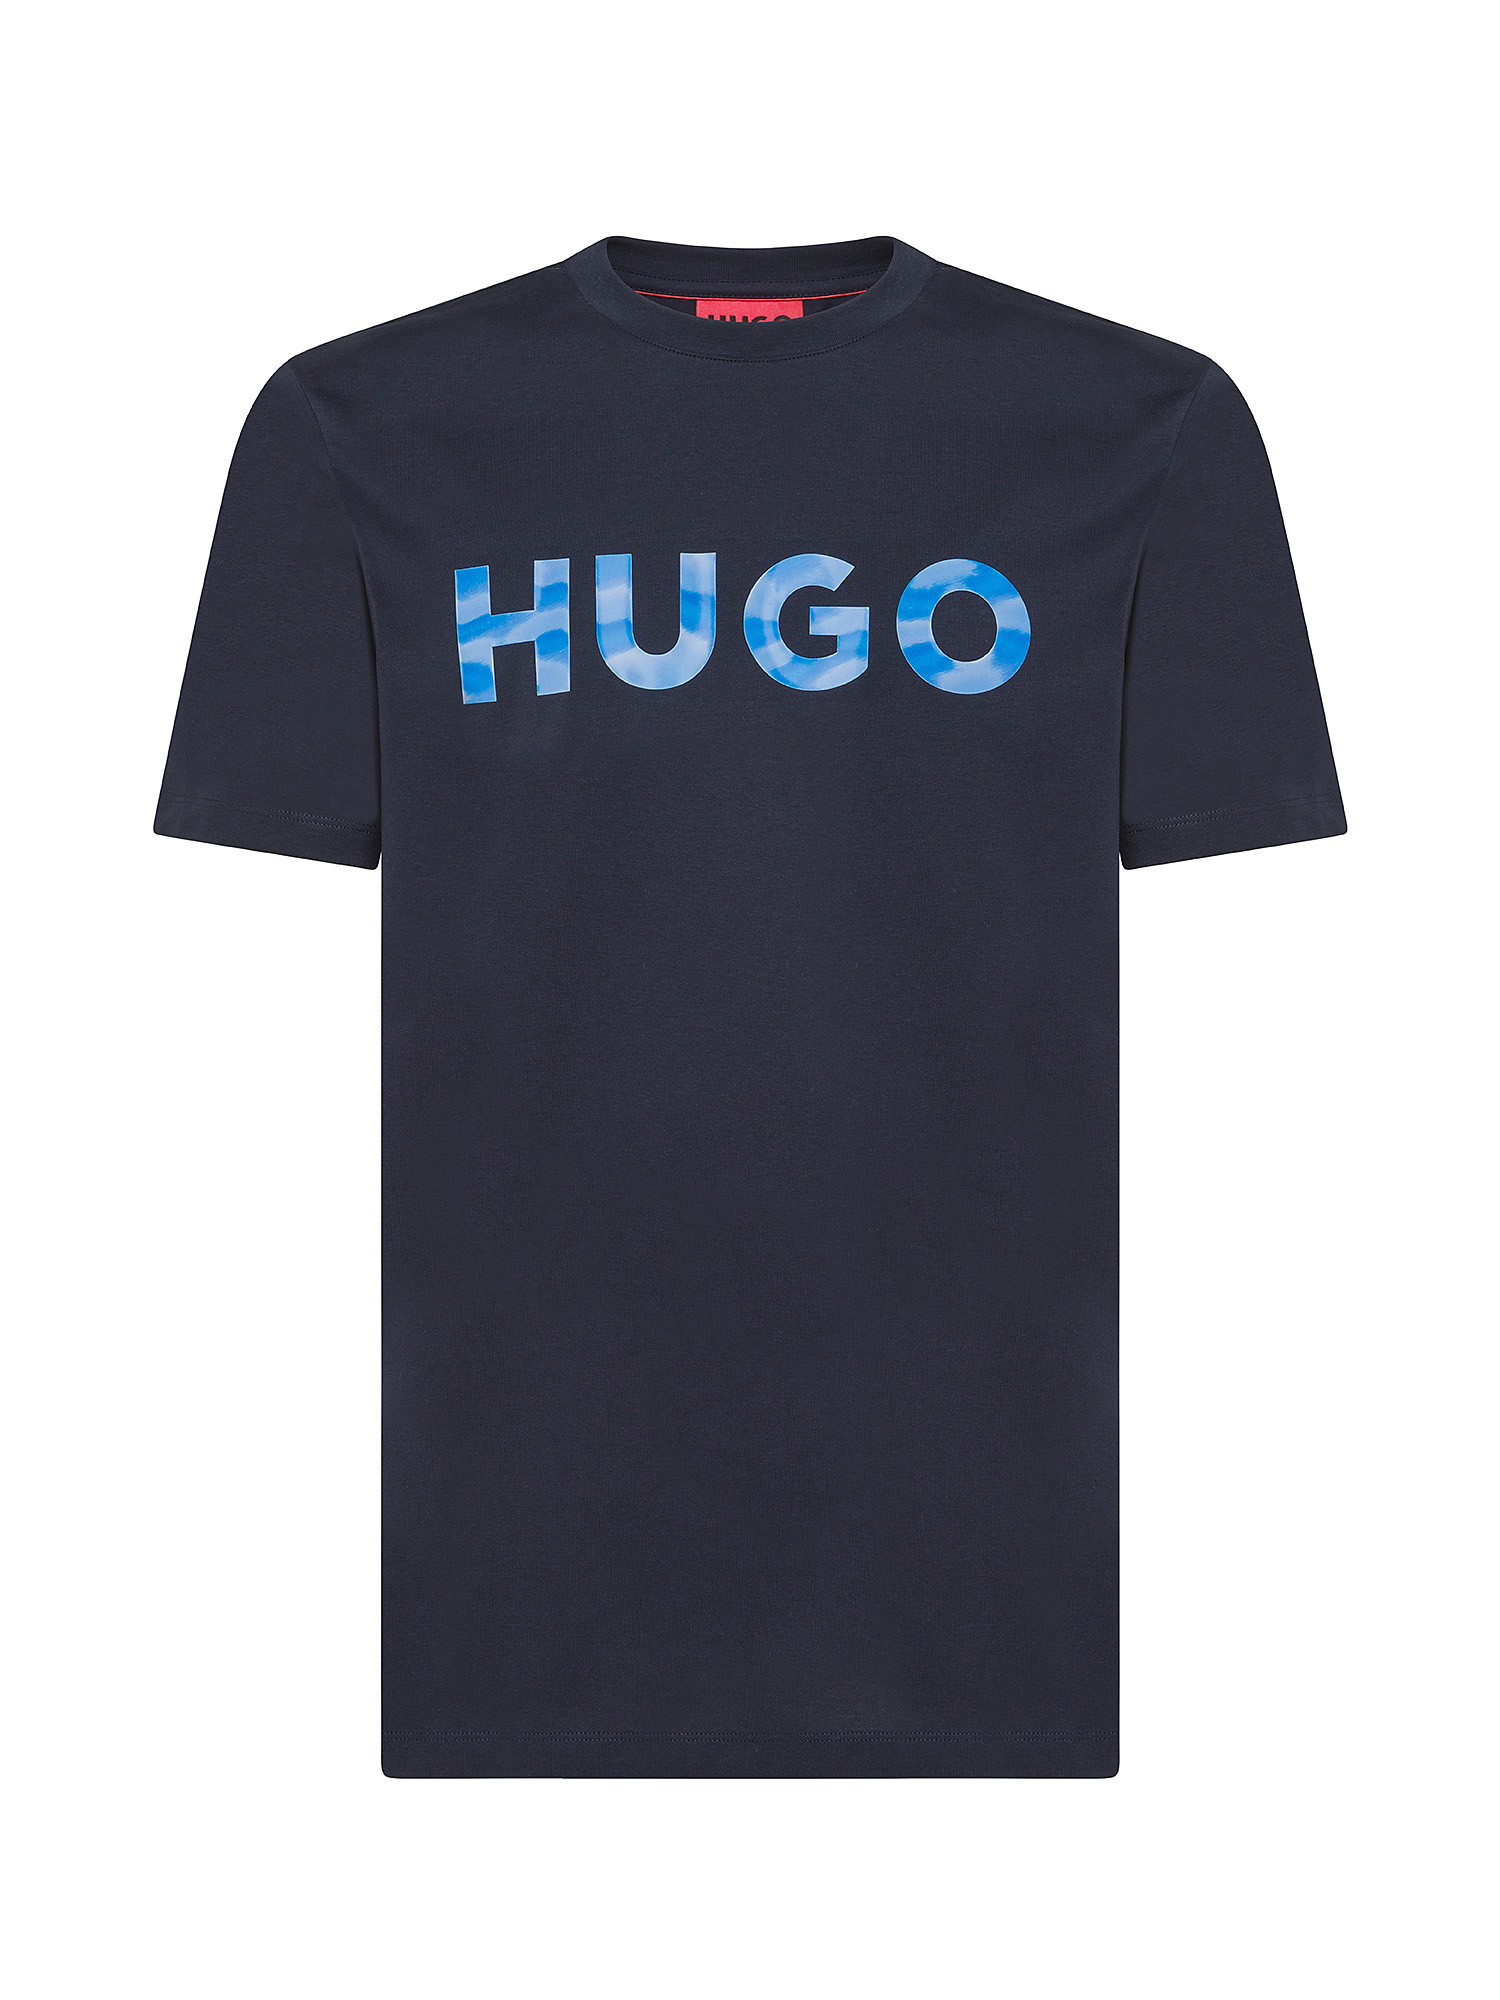 Hugo - T-shirt in cotone biologico con logo stampato, Blu scuro, large image number 0